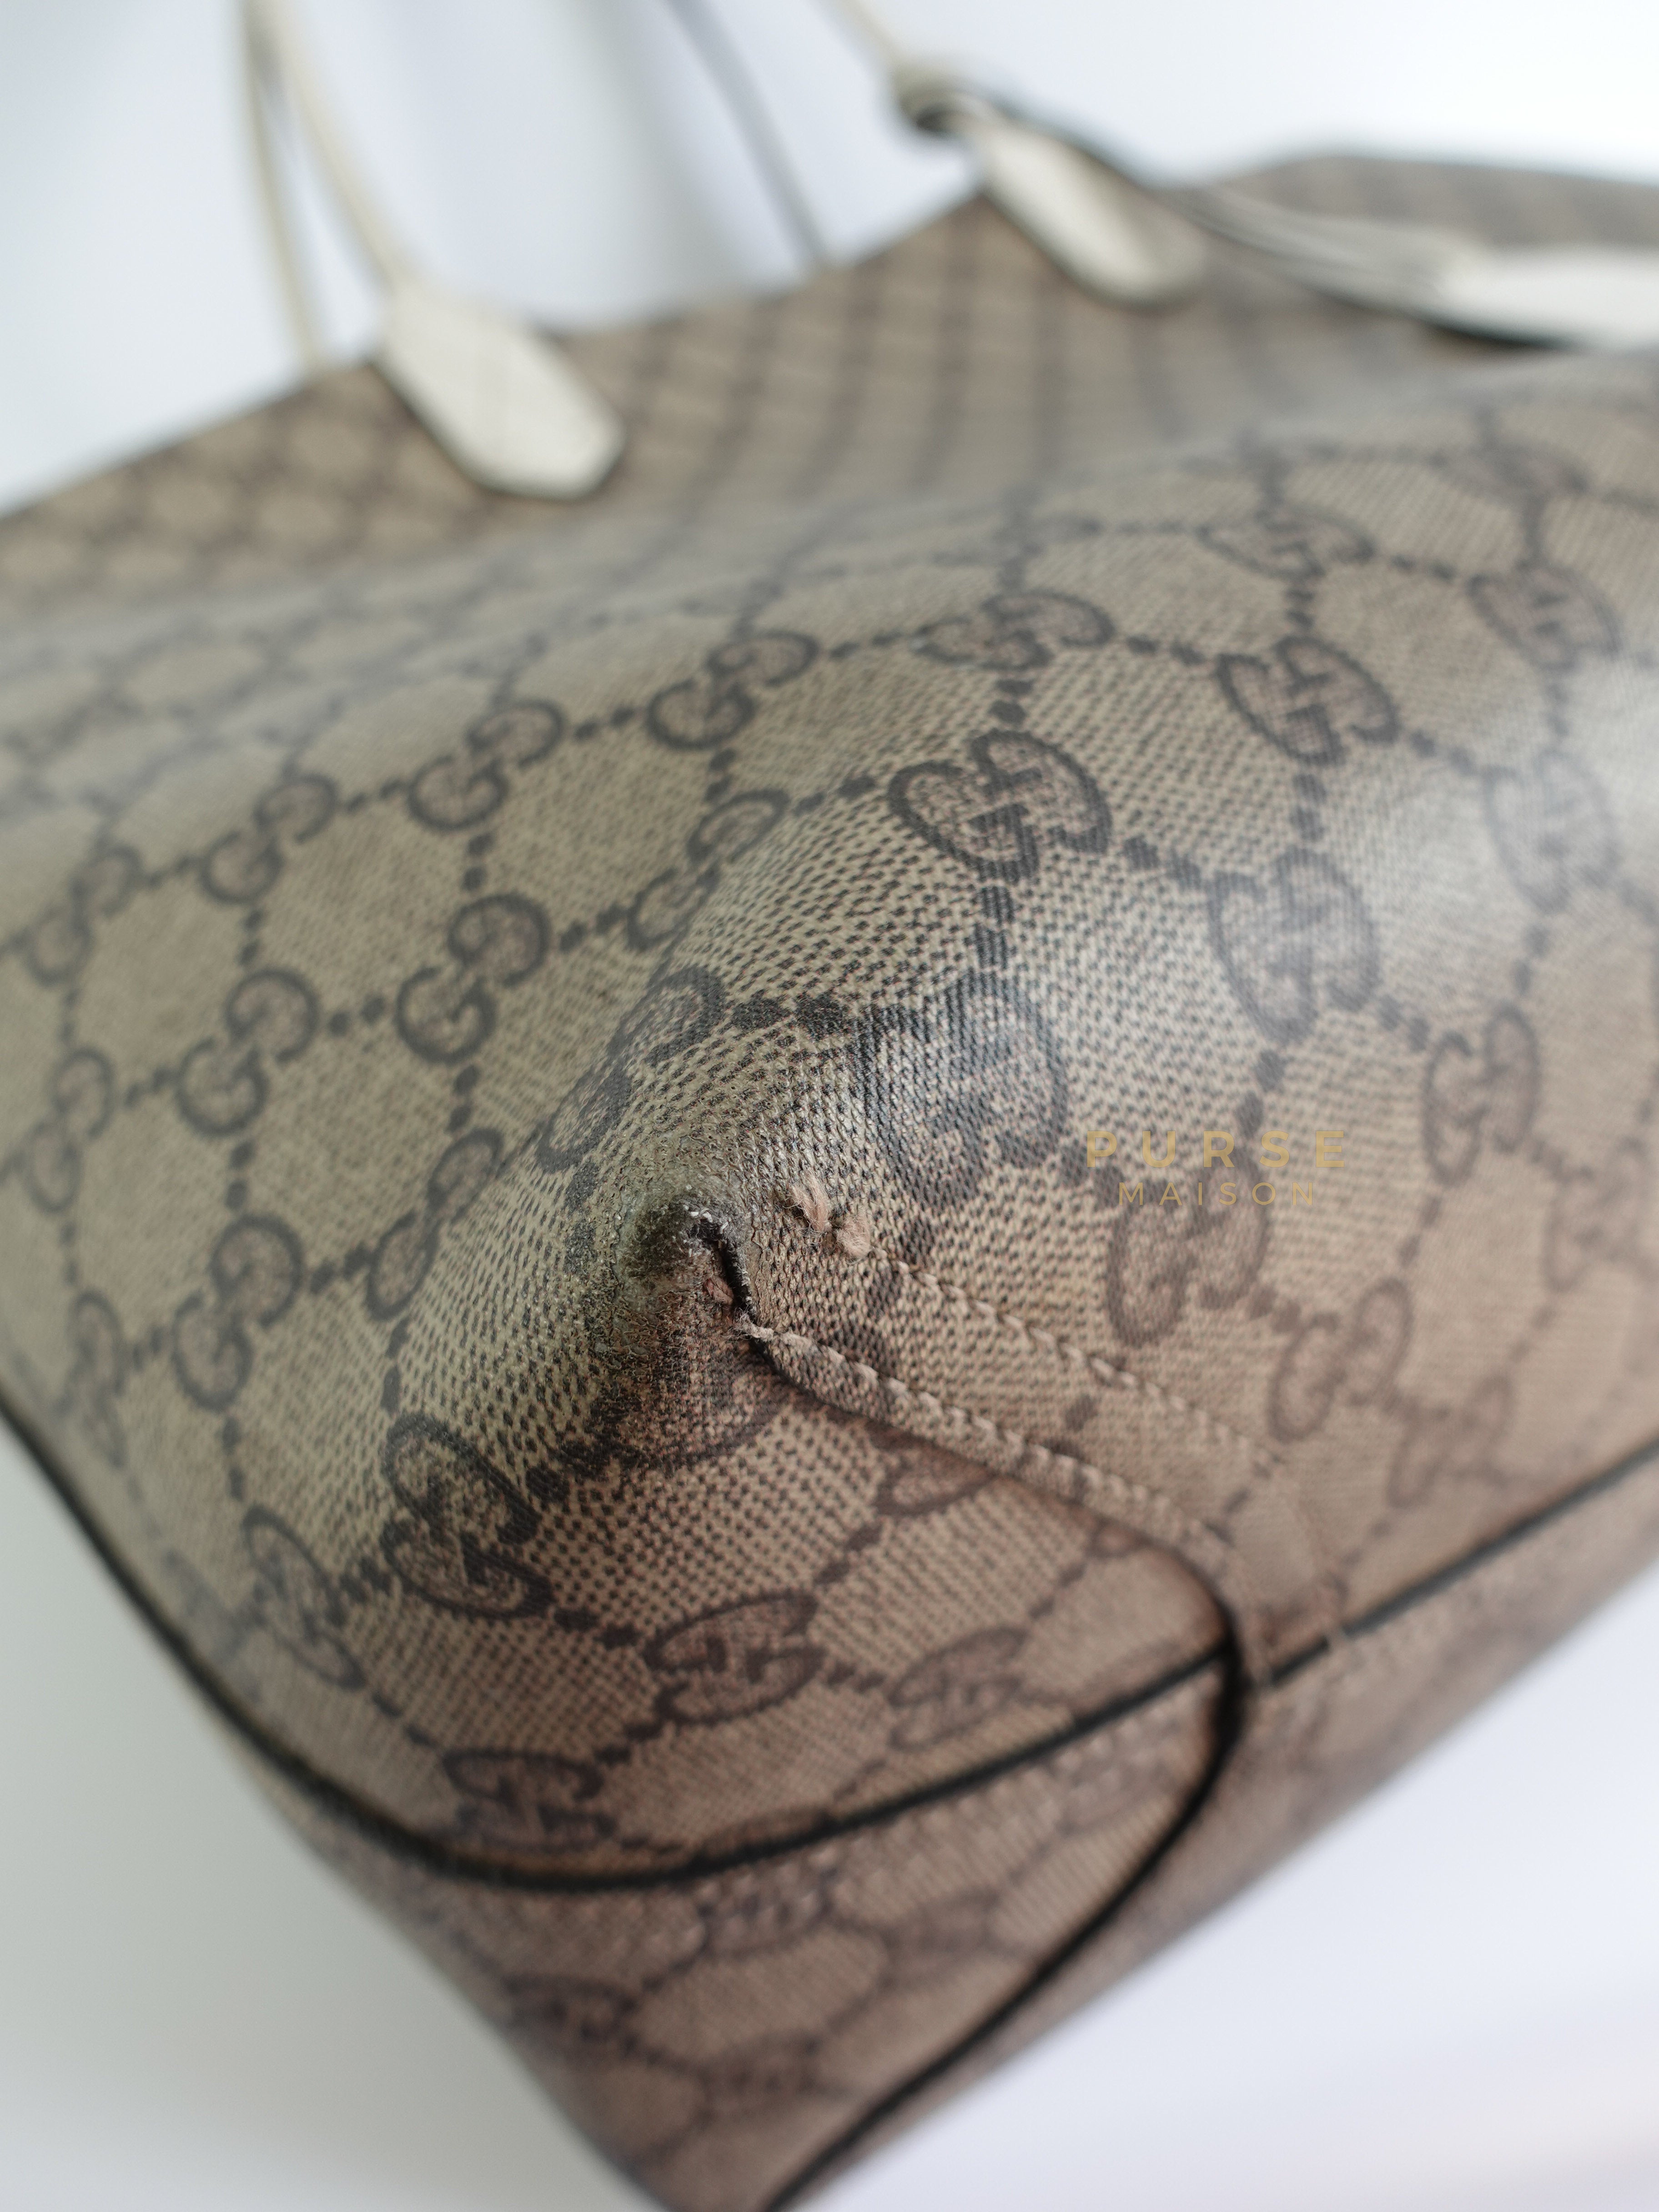 GG Supreme Monogram Large in Reversible Calfskin Tote Bag | Purse Maison Luxury Bags Shop